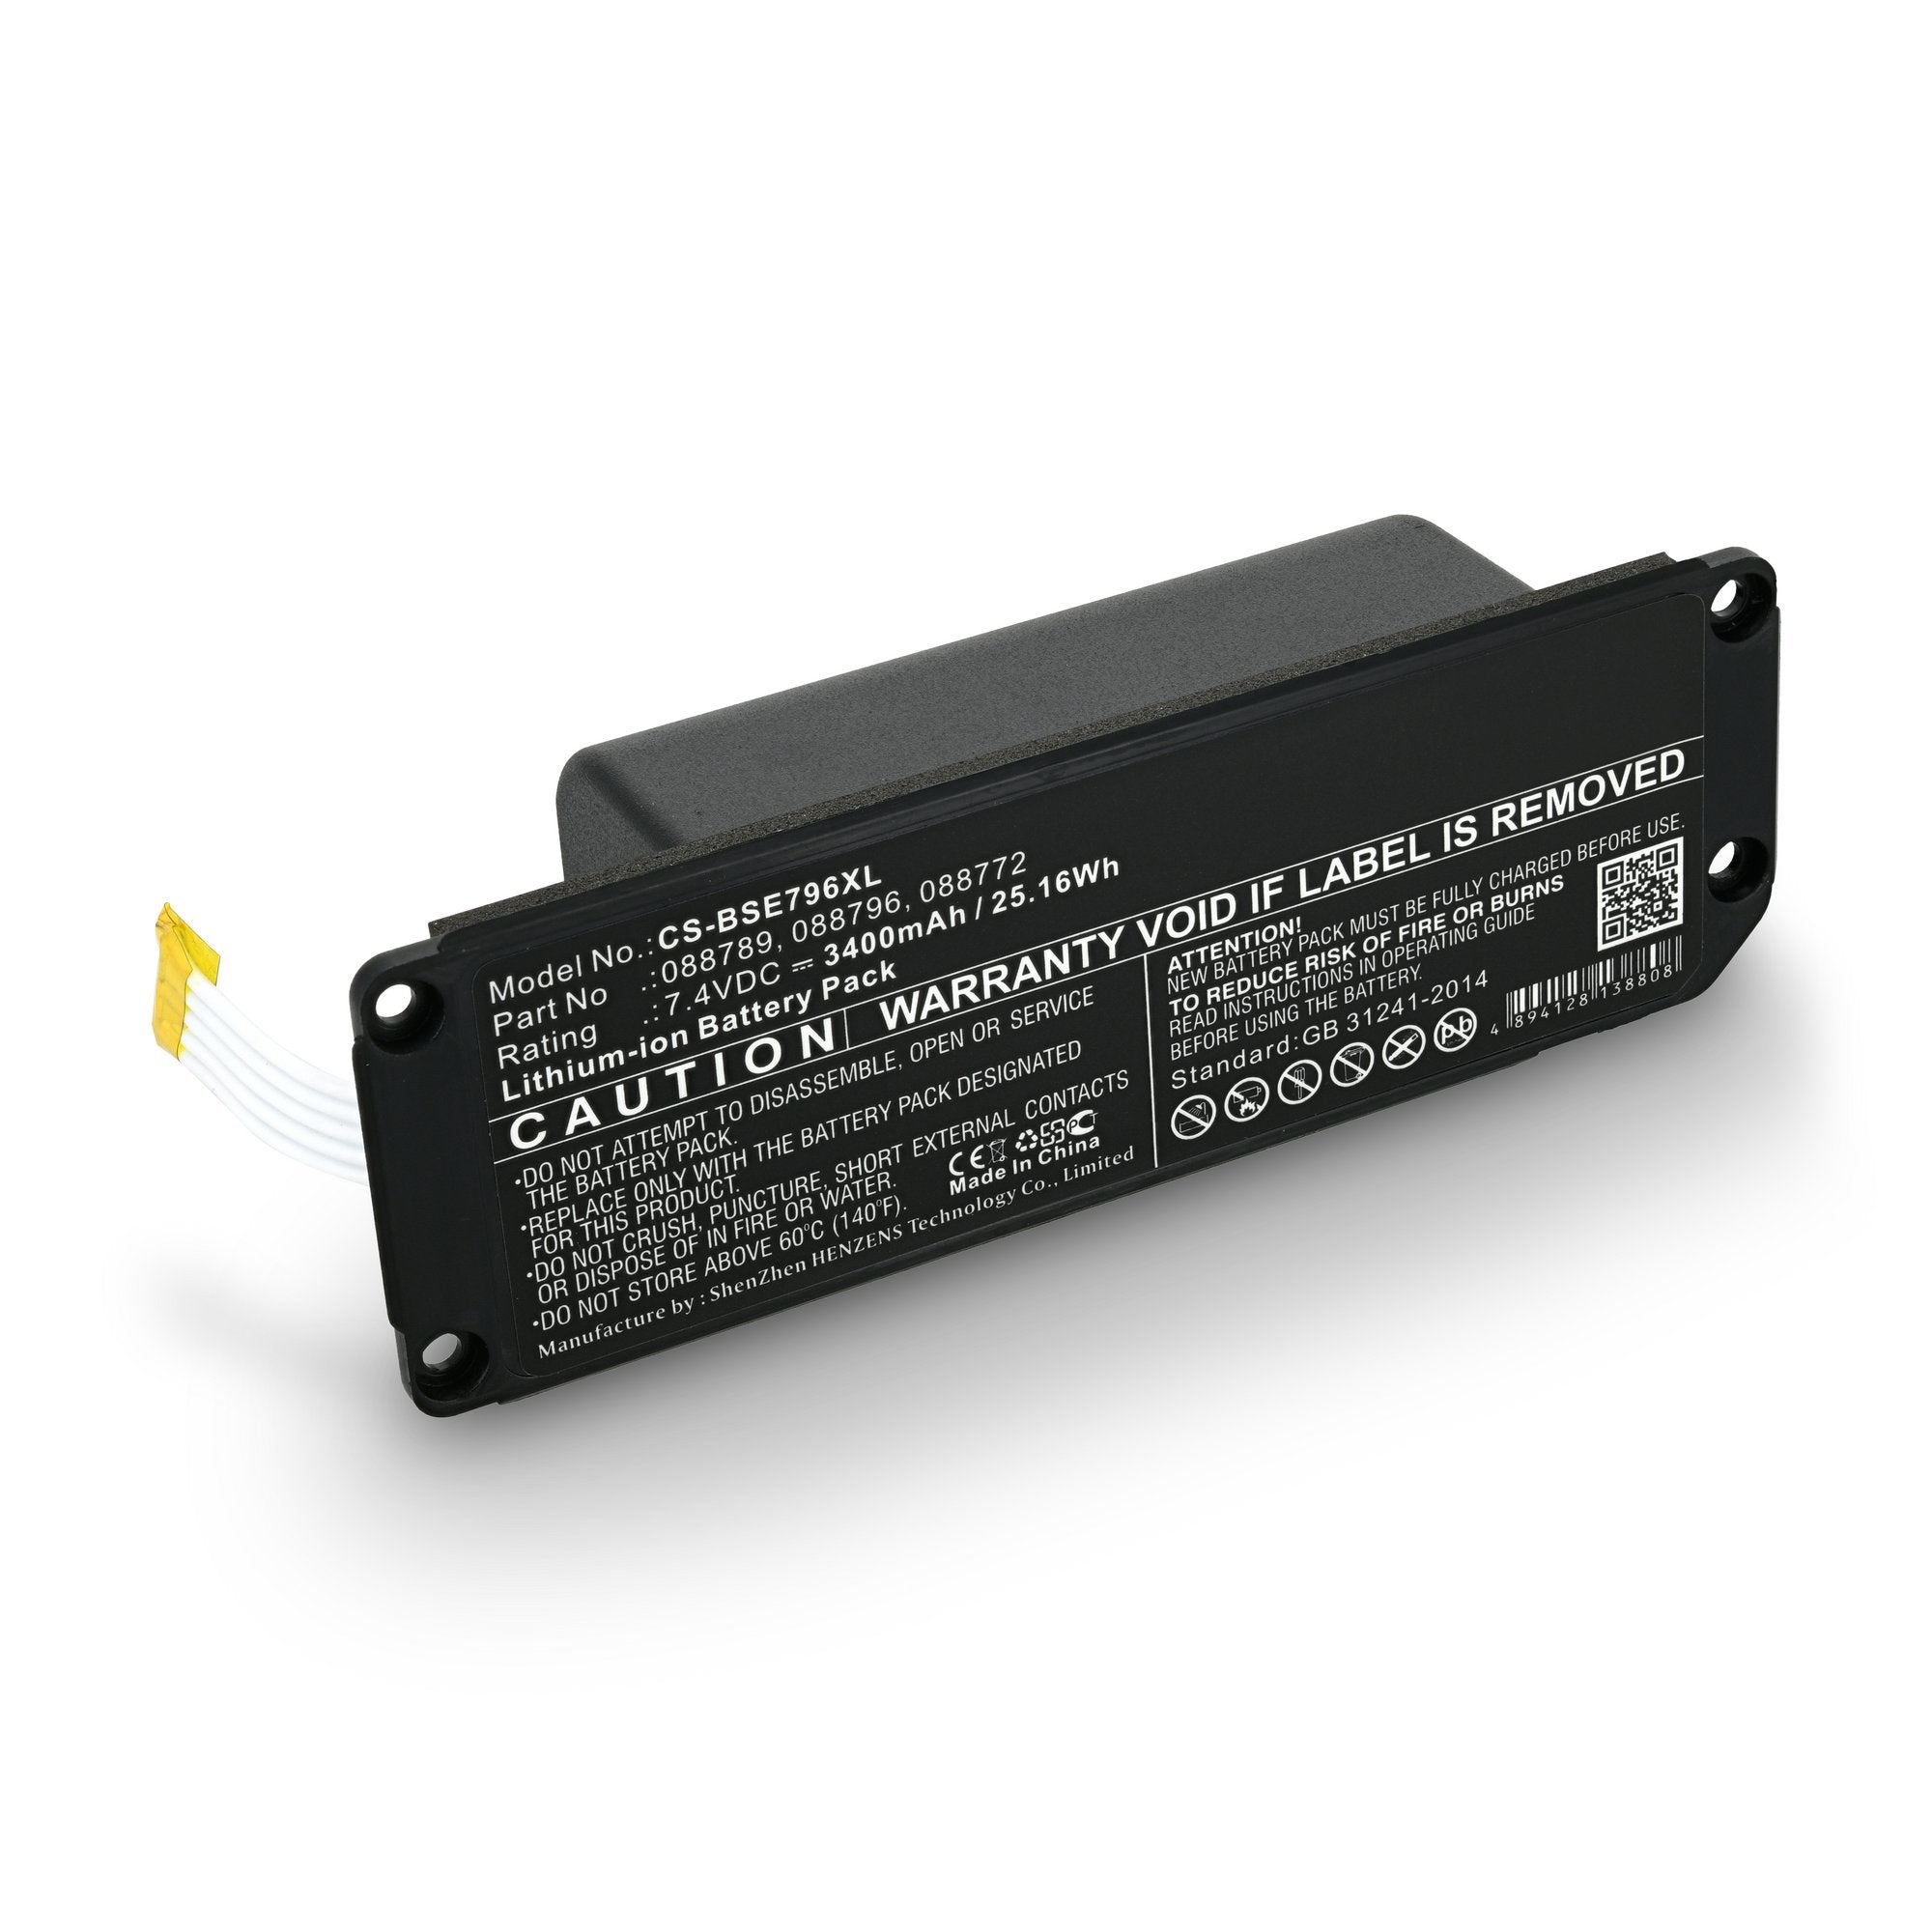 Bose SoundLink Mini Battery